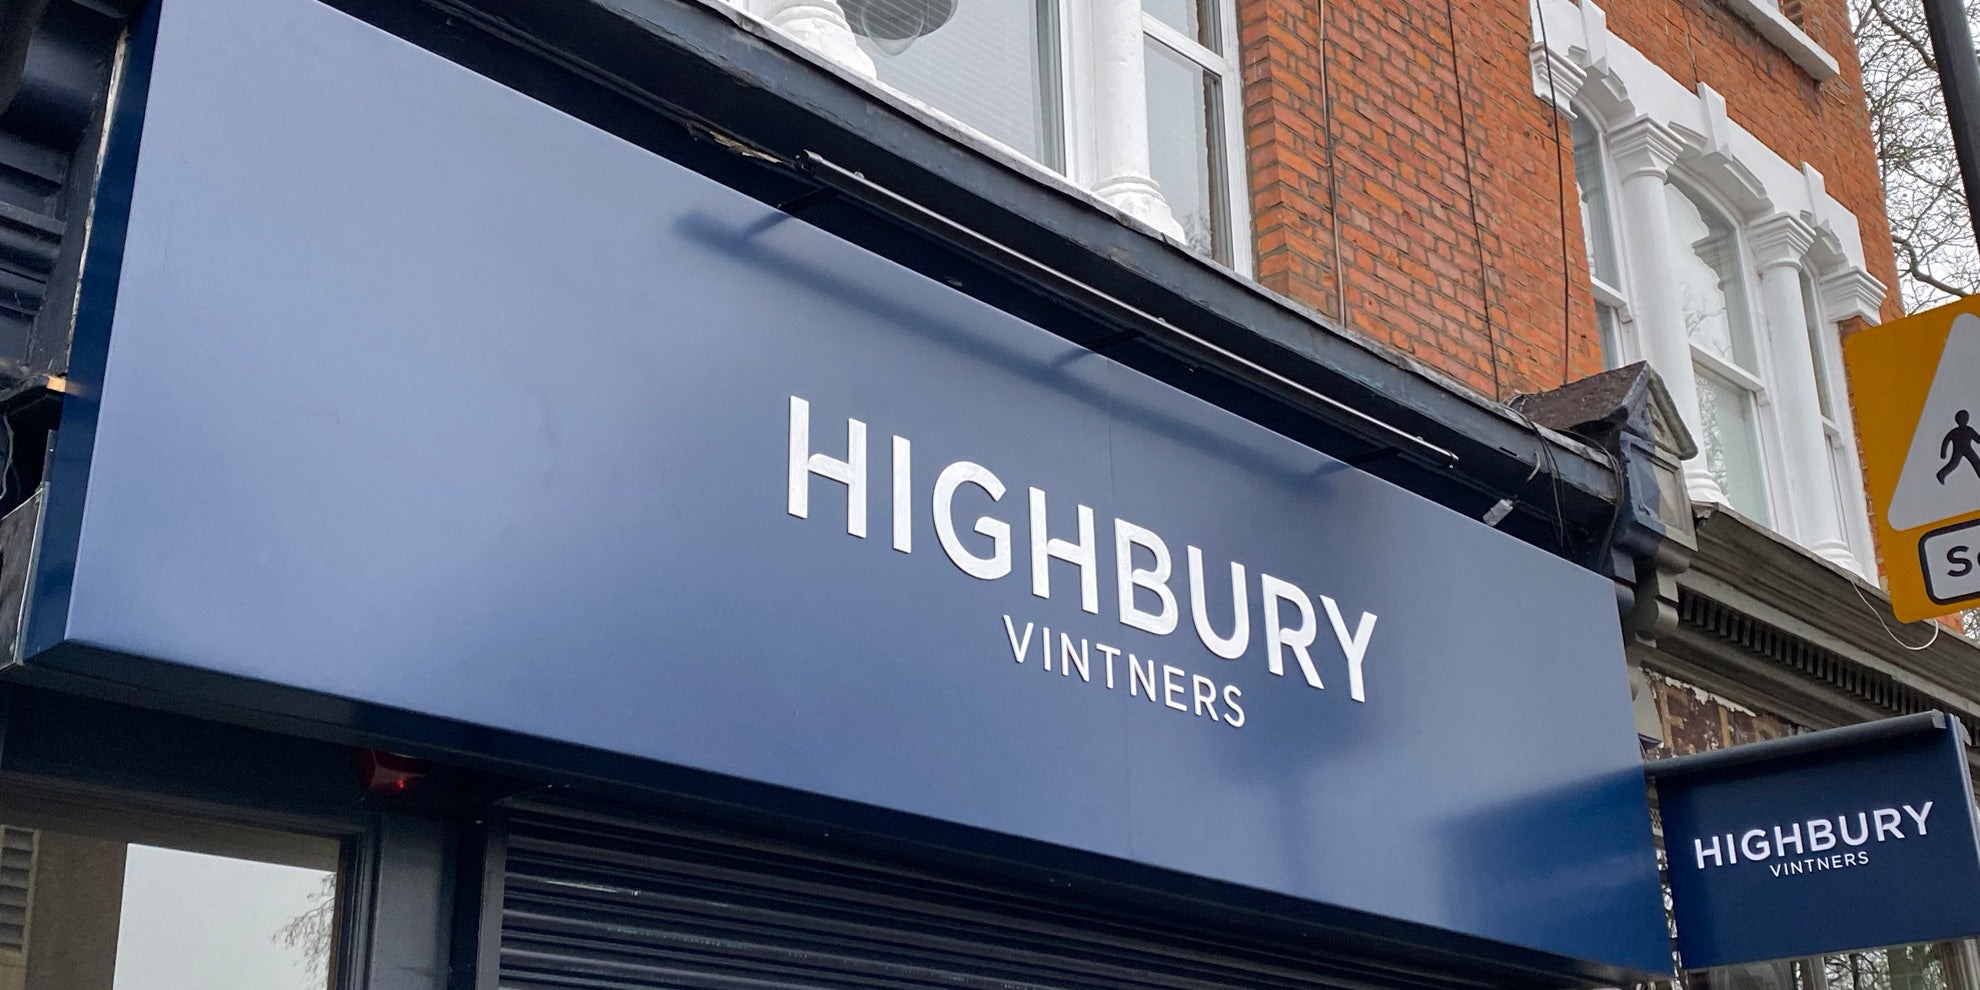 Highbury Vintners Shop Fascia